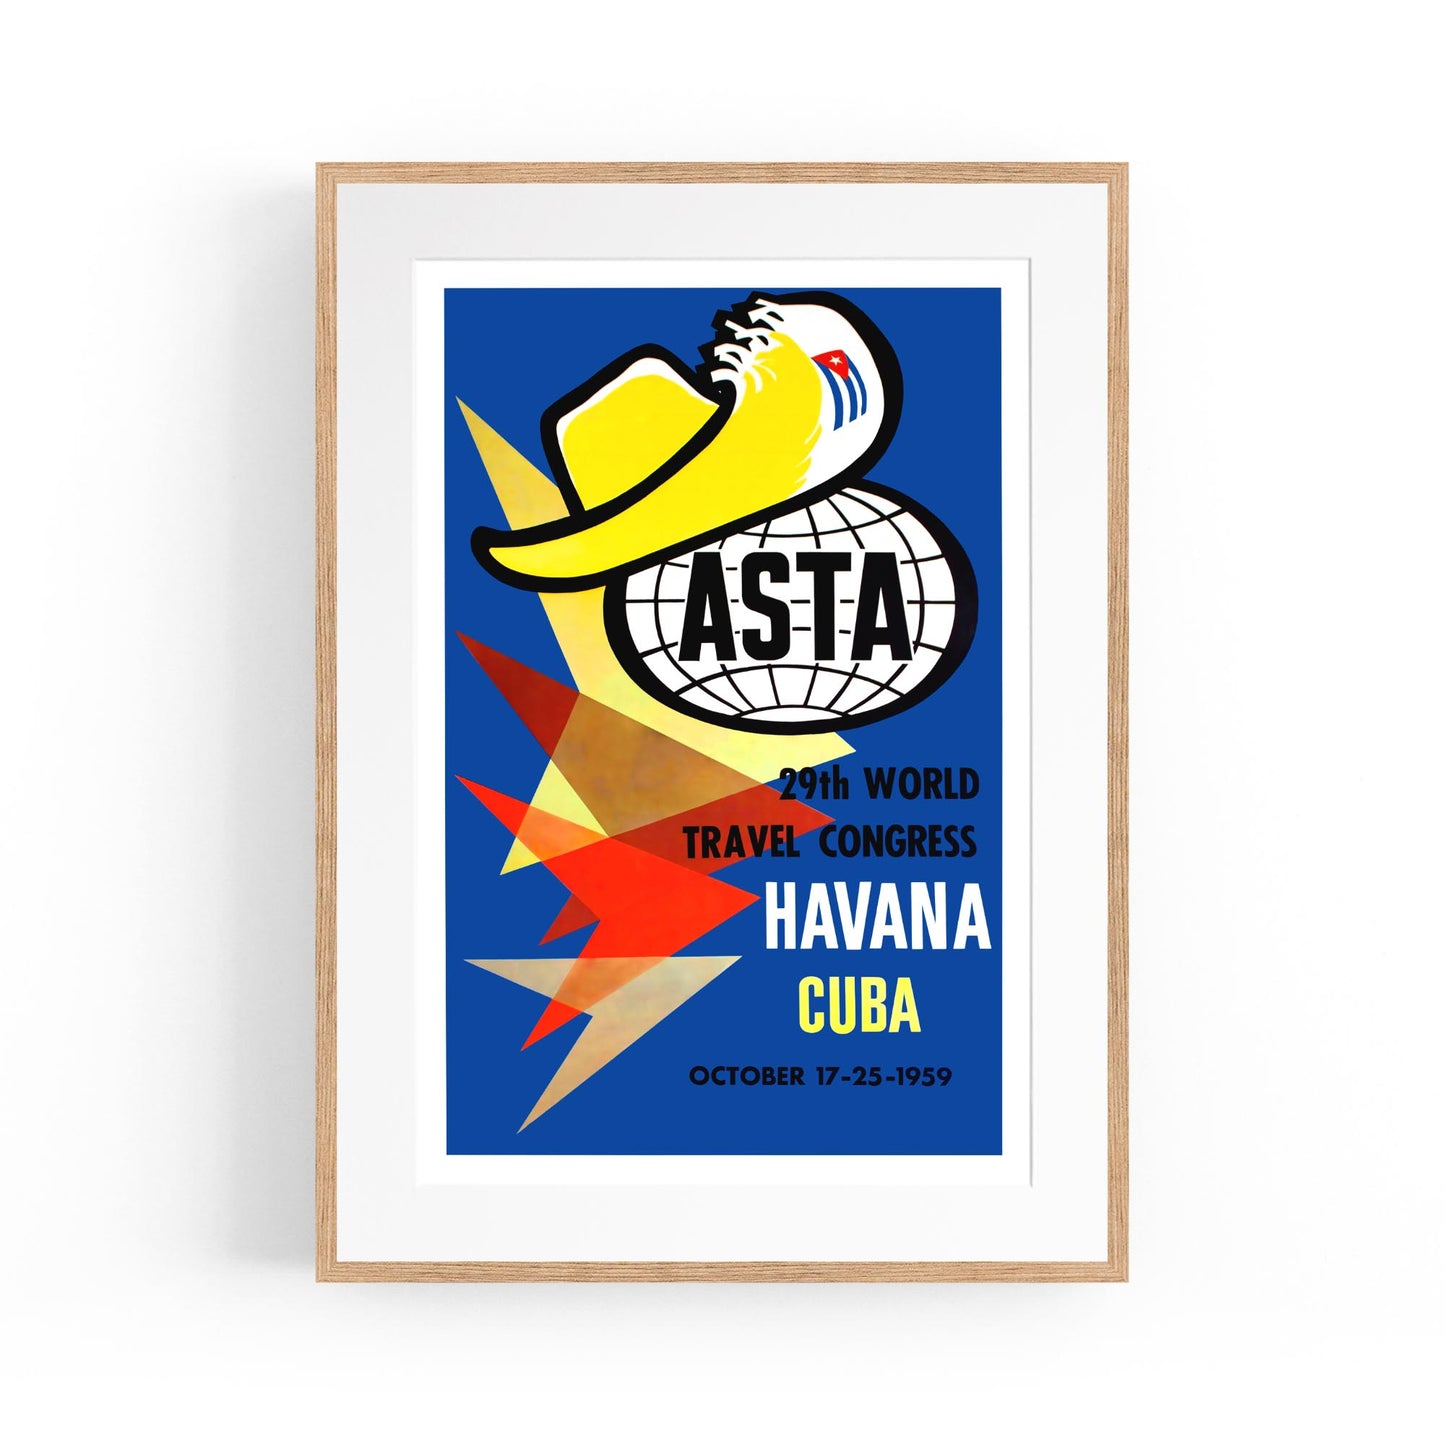 Havana, Cuba - ASTA 29th World Travel Congress 1959 | Framed Vintage Travel Poster